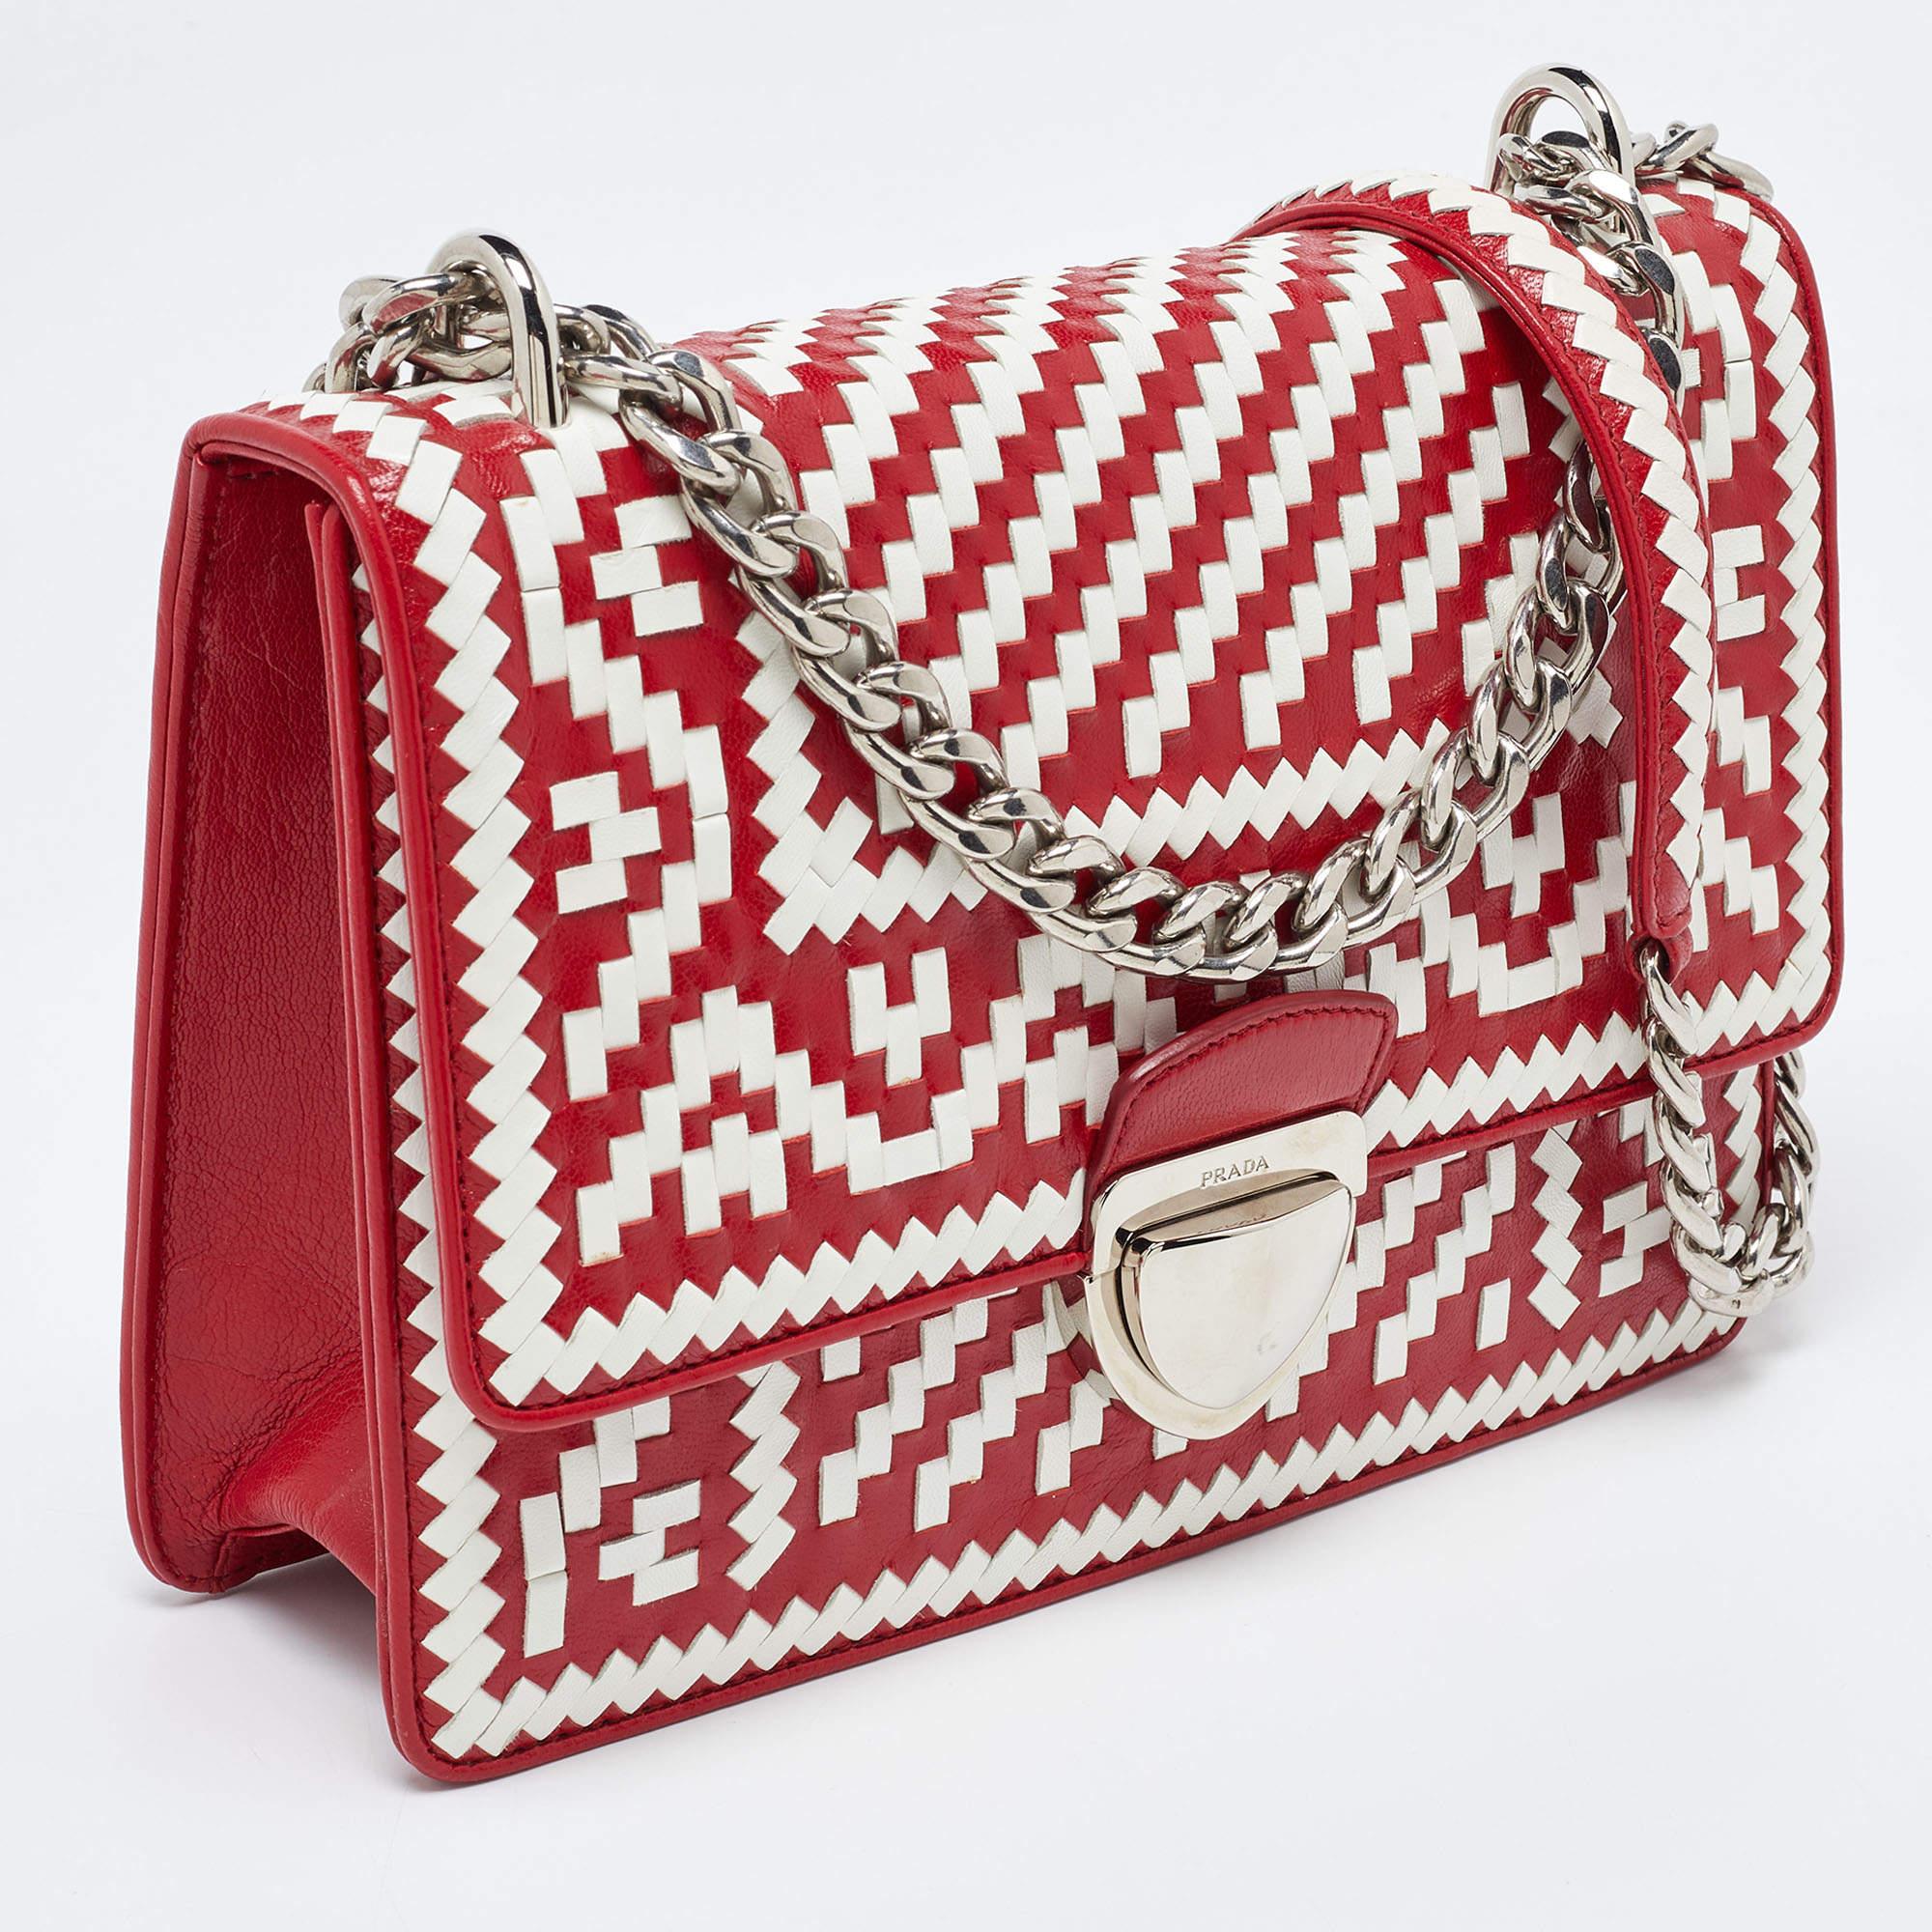 Prada Red/White Madras Woven Leather Pushlock Flap Bag 7